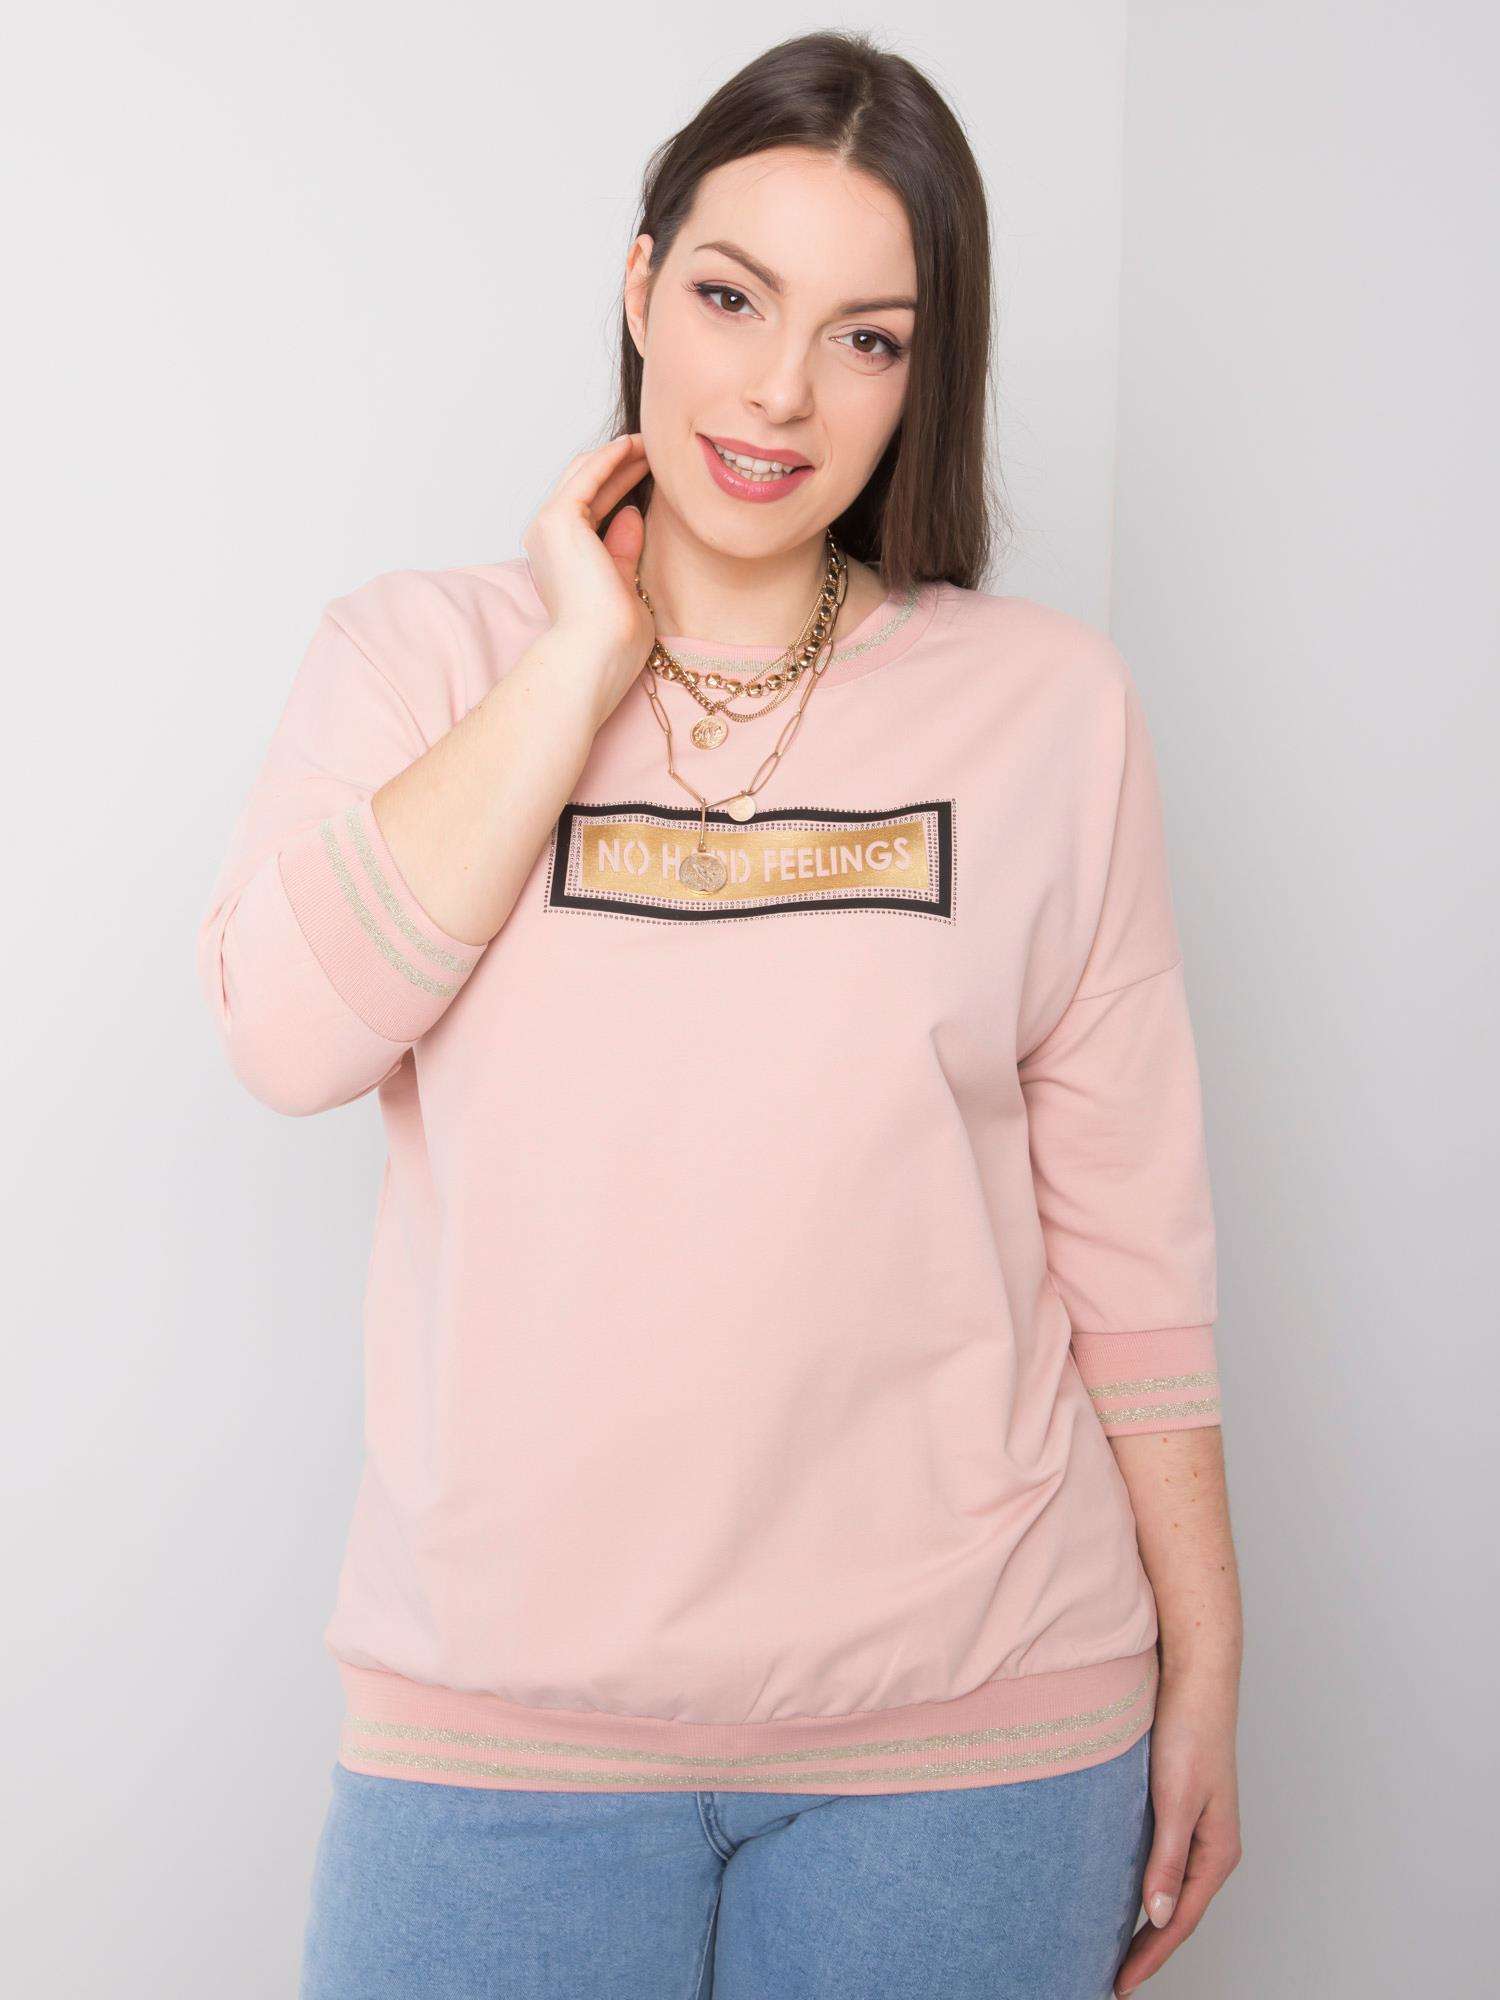 Muffled pink cotton and large sweatshirt